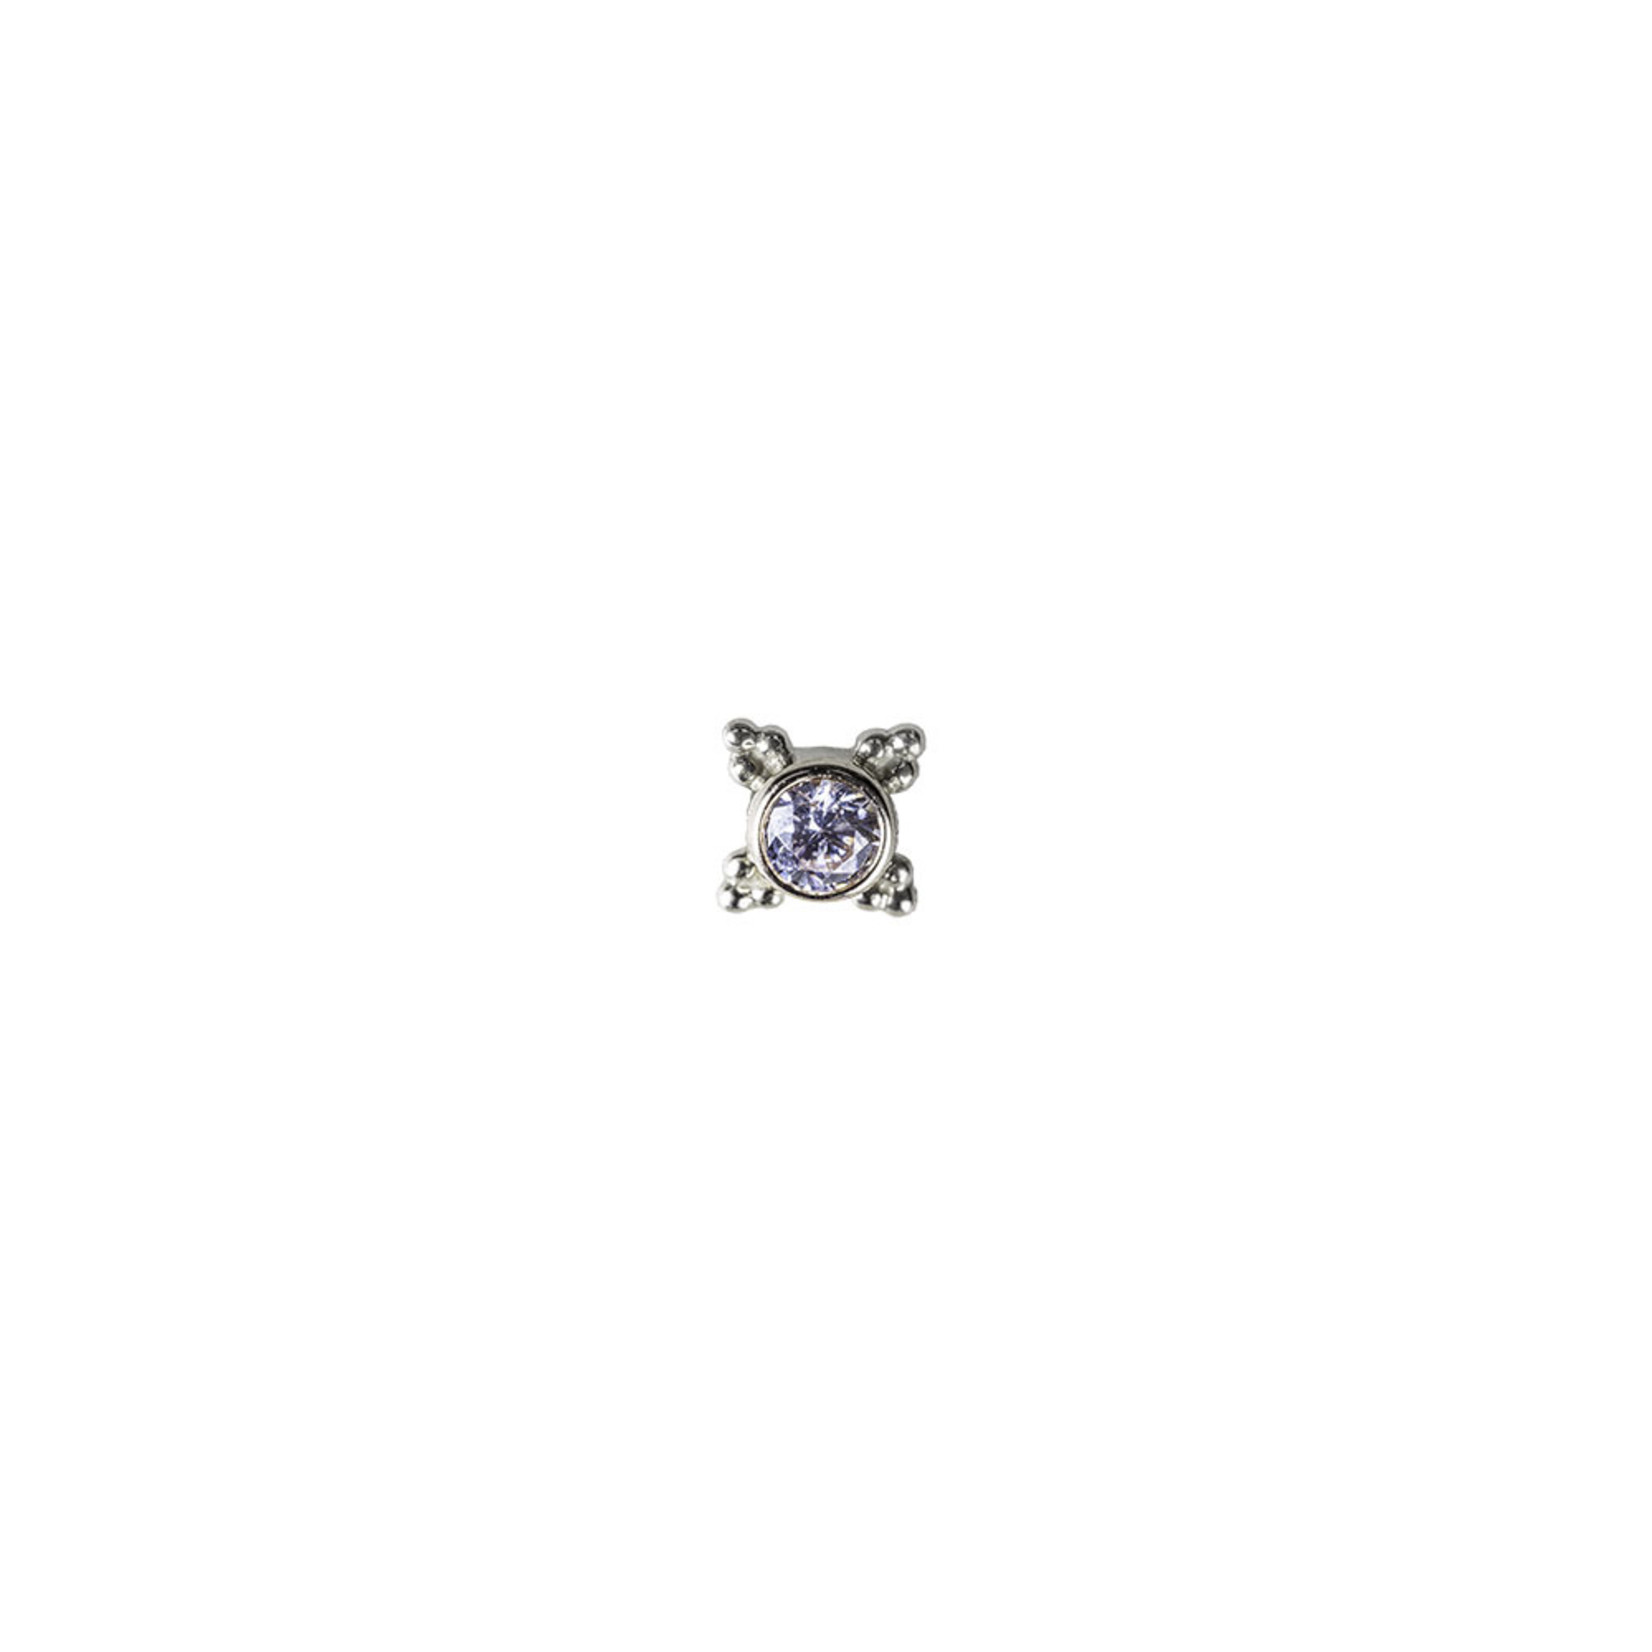 BVLA BVLA 5.0 "Mini Kandy" press-fit end with 2.0 AA white sapphire